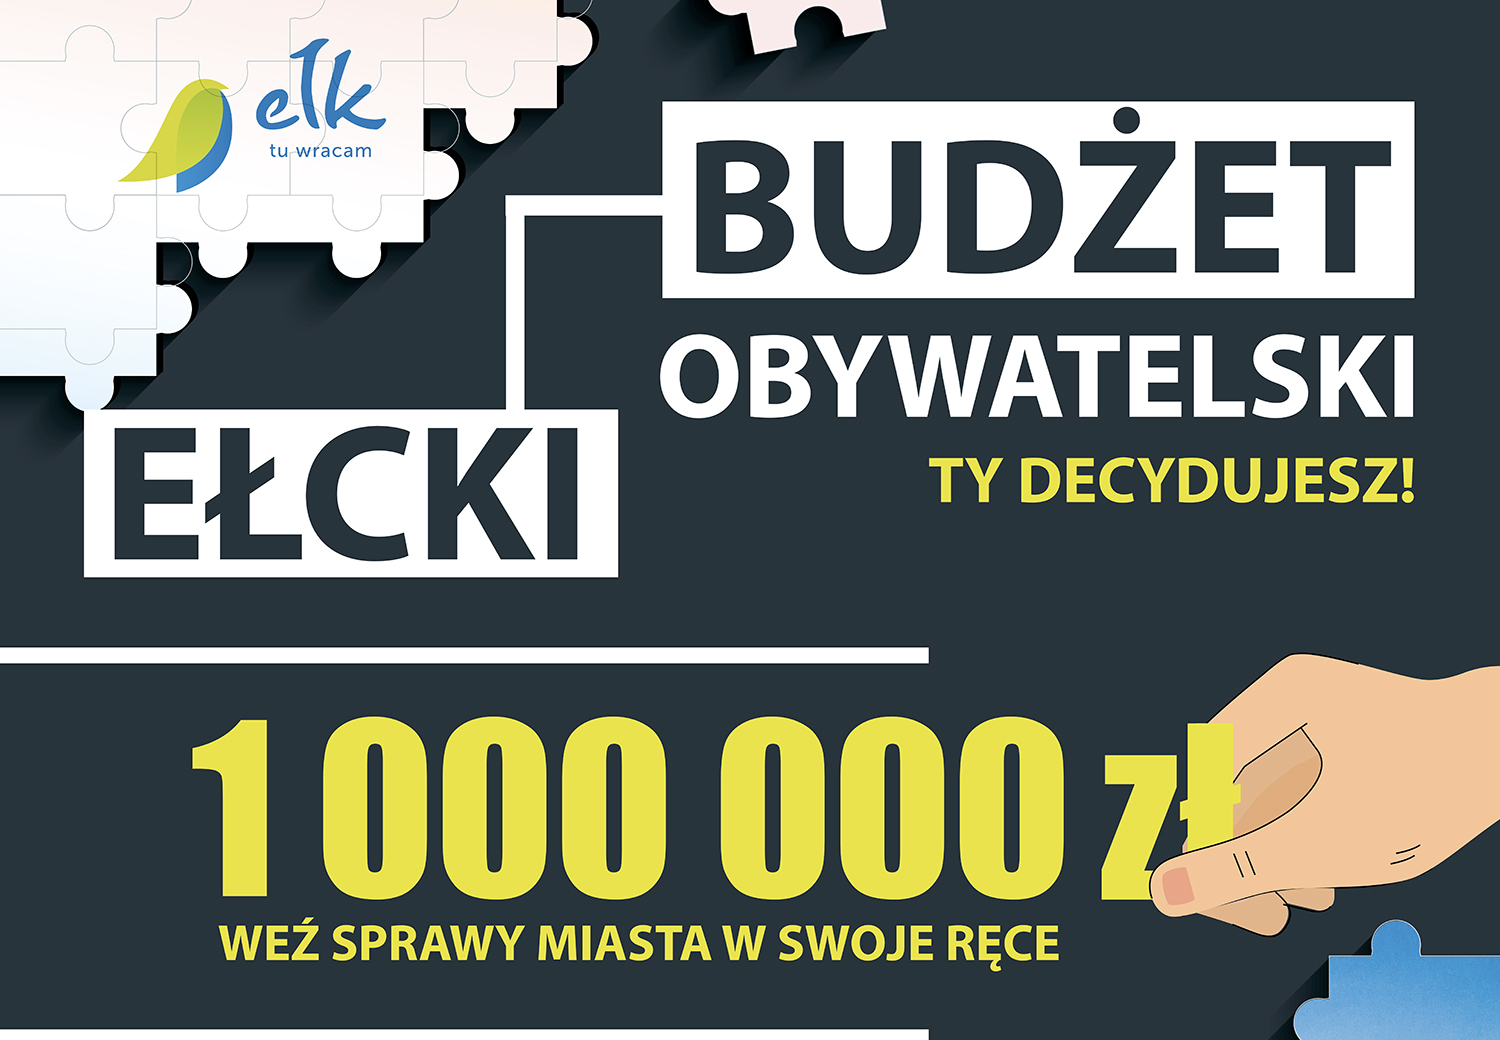 Ełk Civic Budget – voting starts soon!